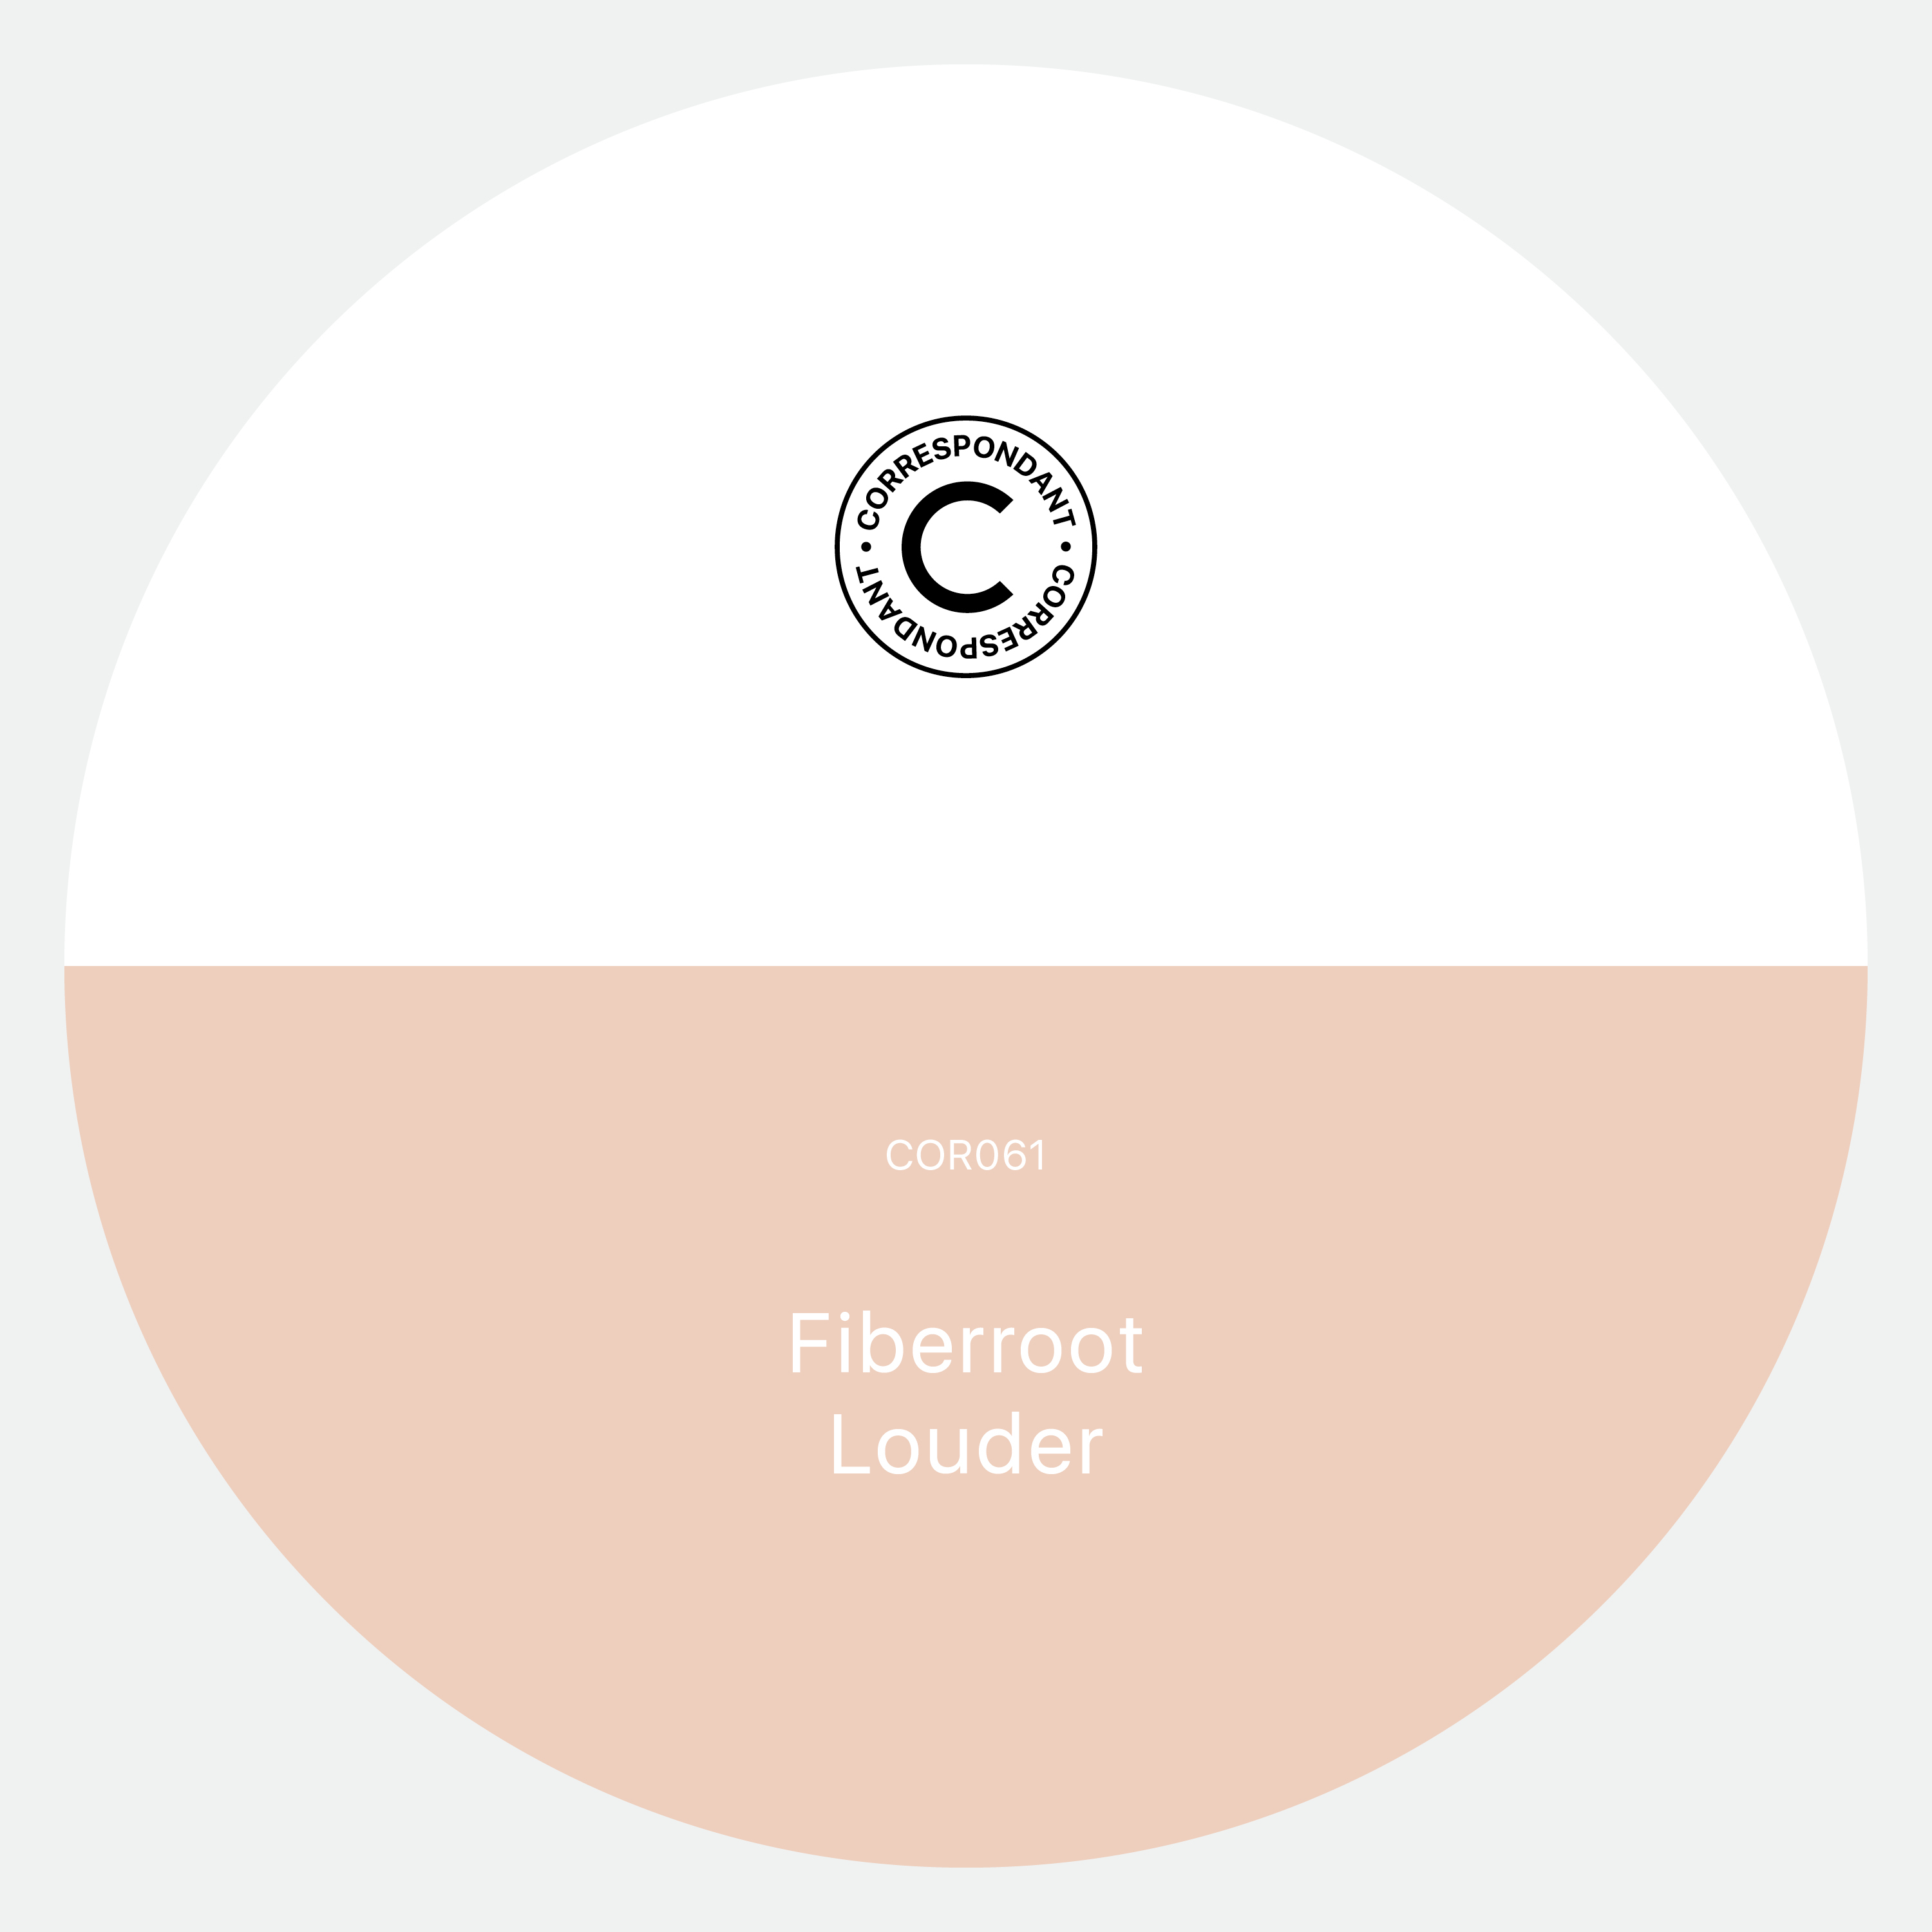 Fiberroot - Louder / Correspondant